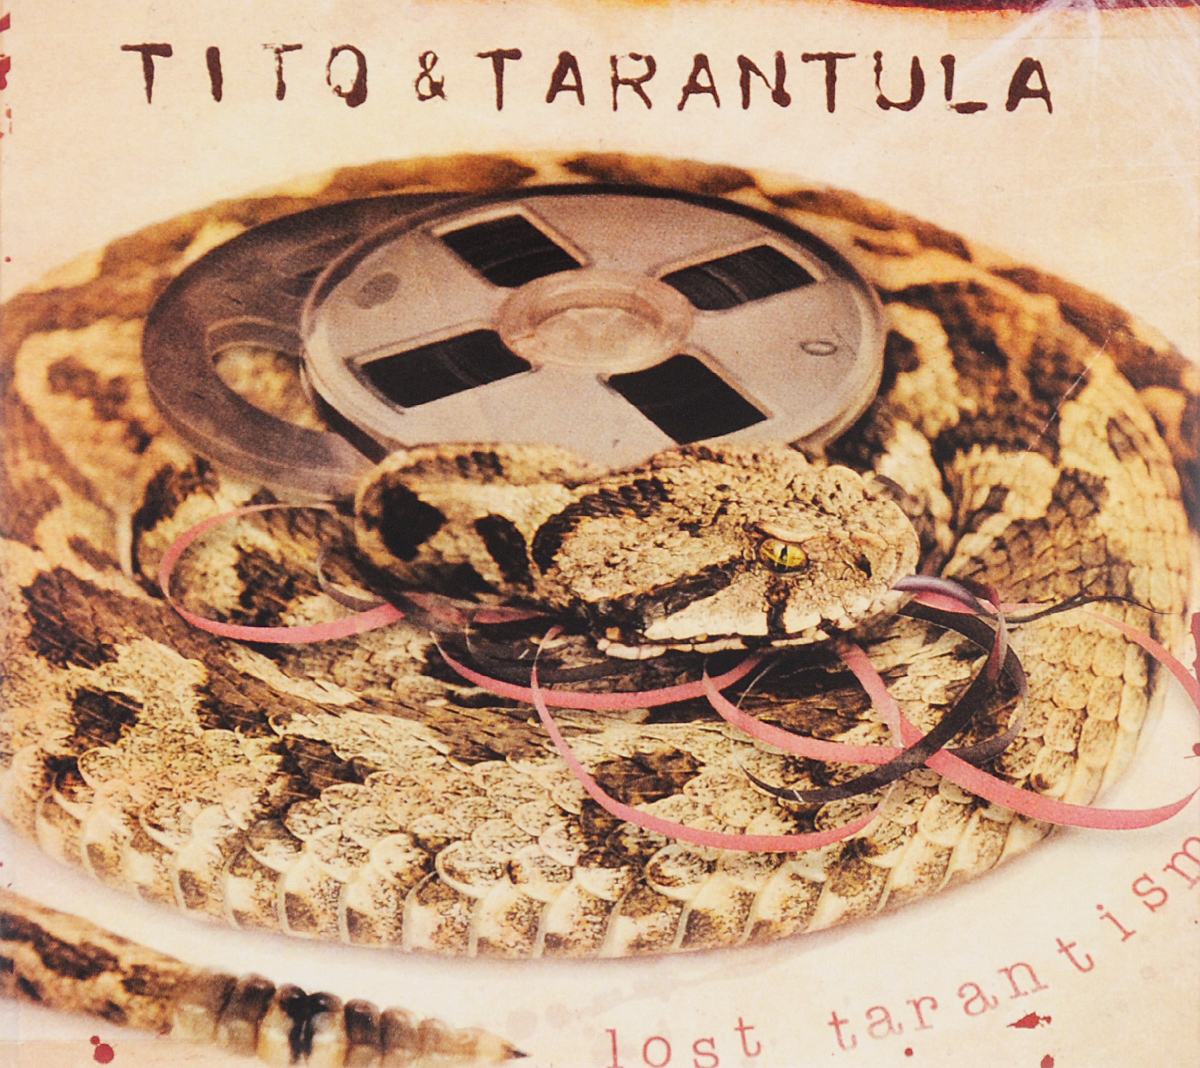 Tito & Tarantula. Lost Tarantism